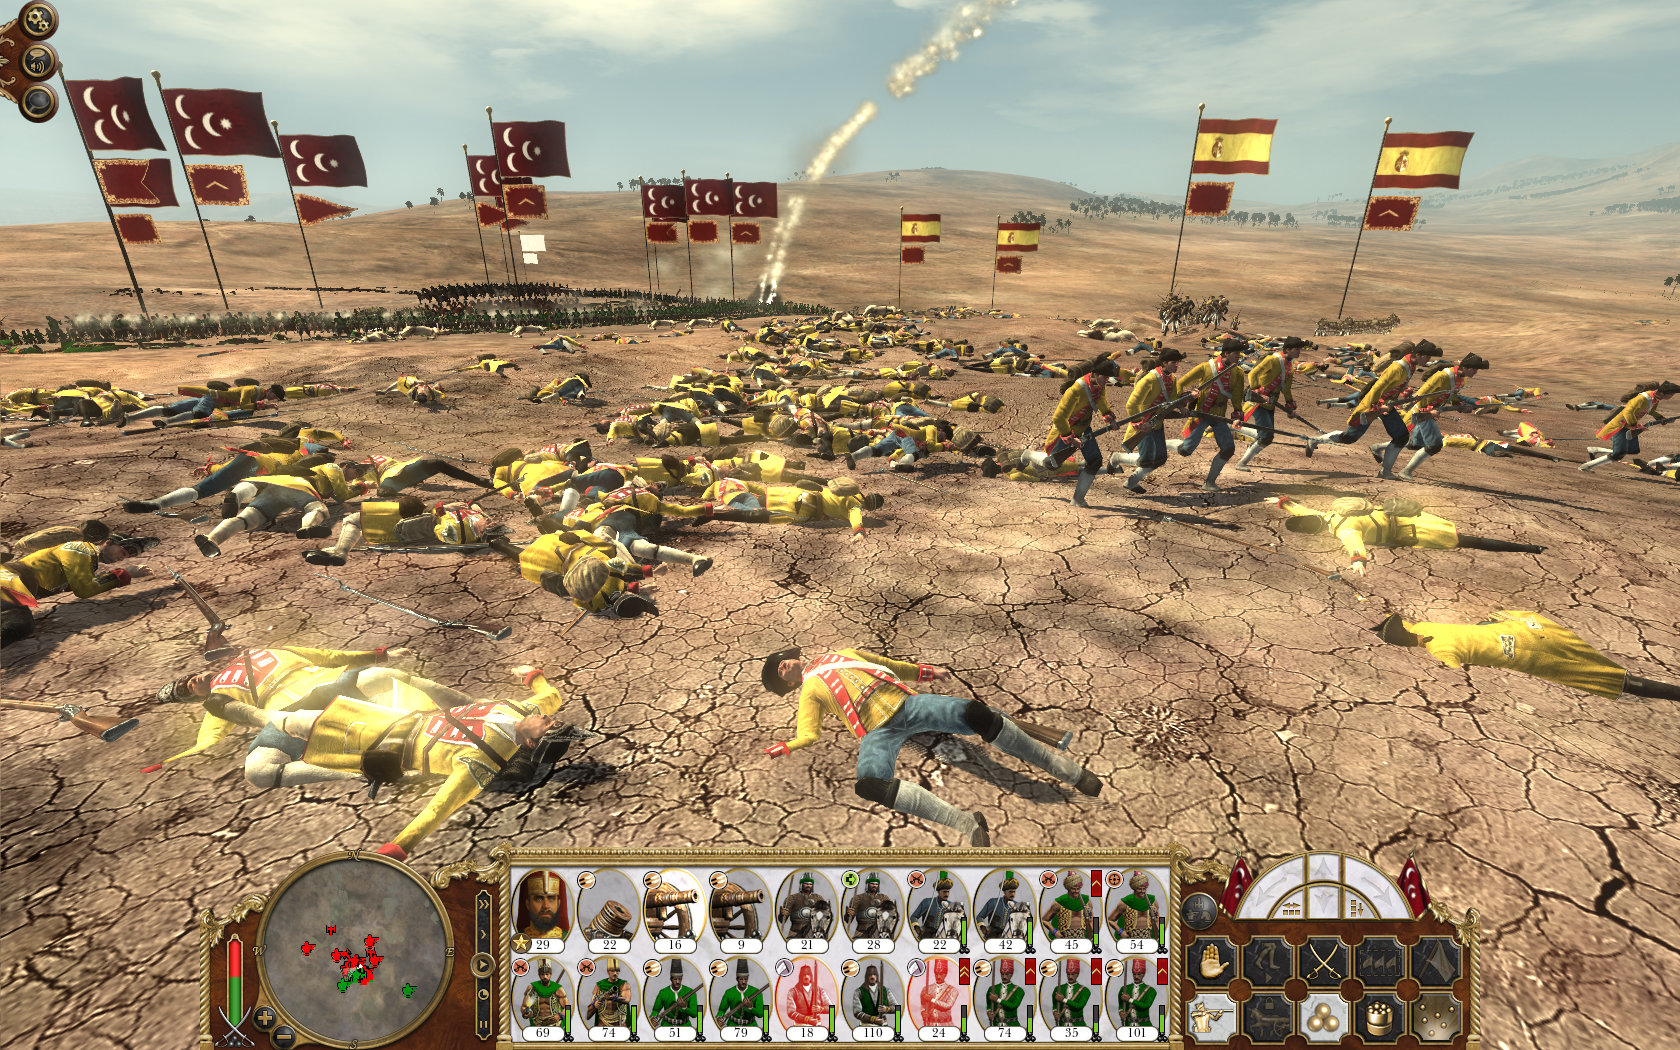 Juegos como Rome Total War para Mac.